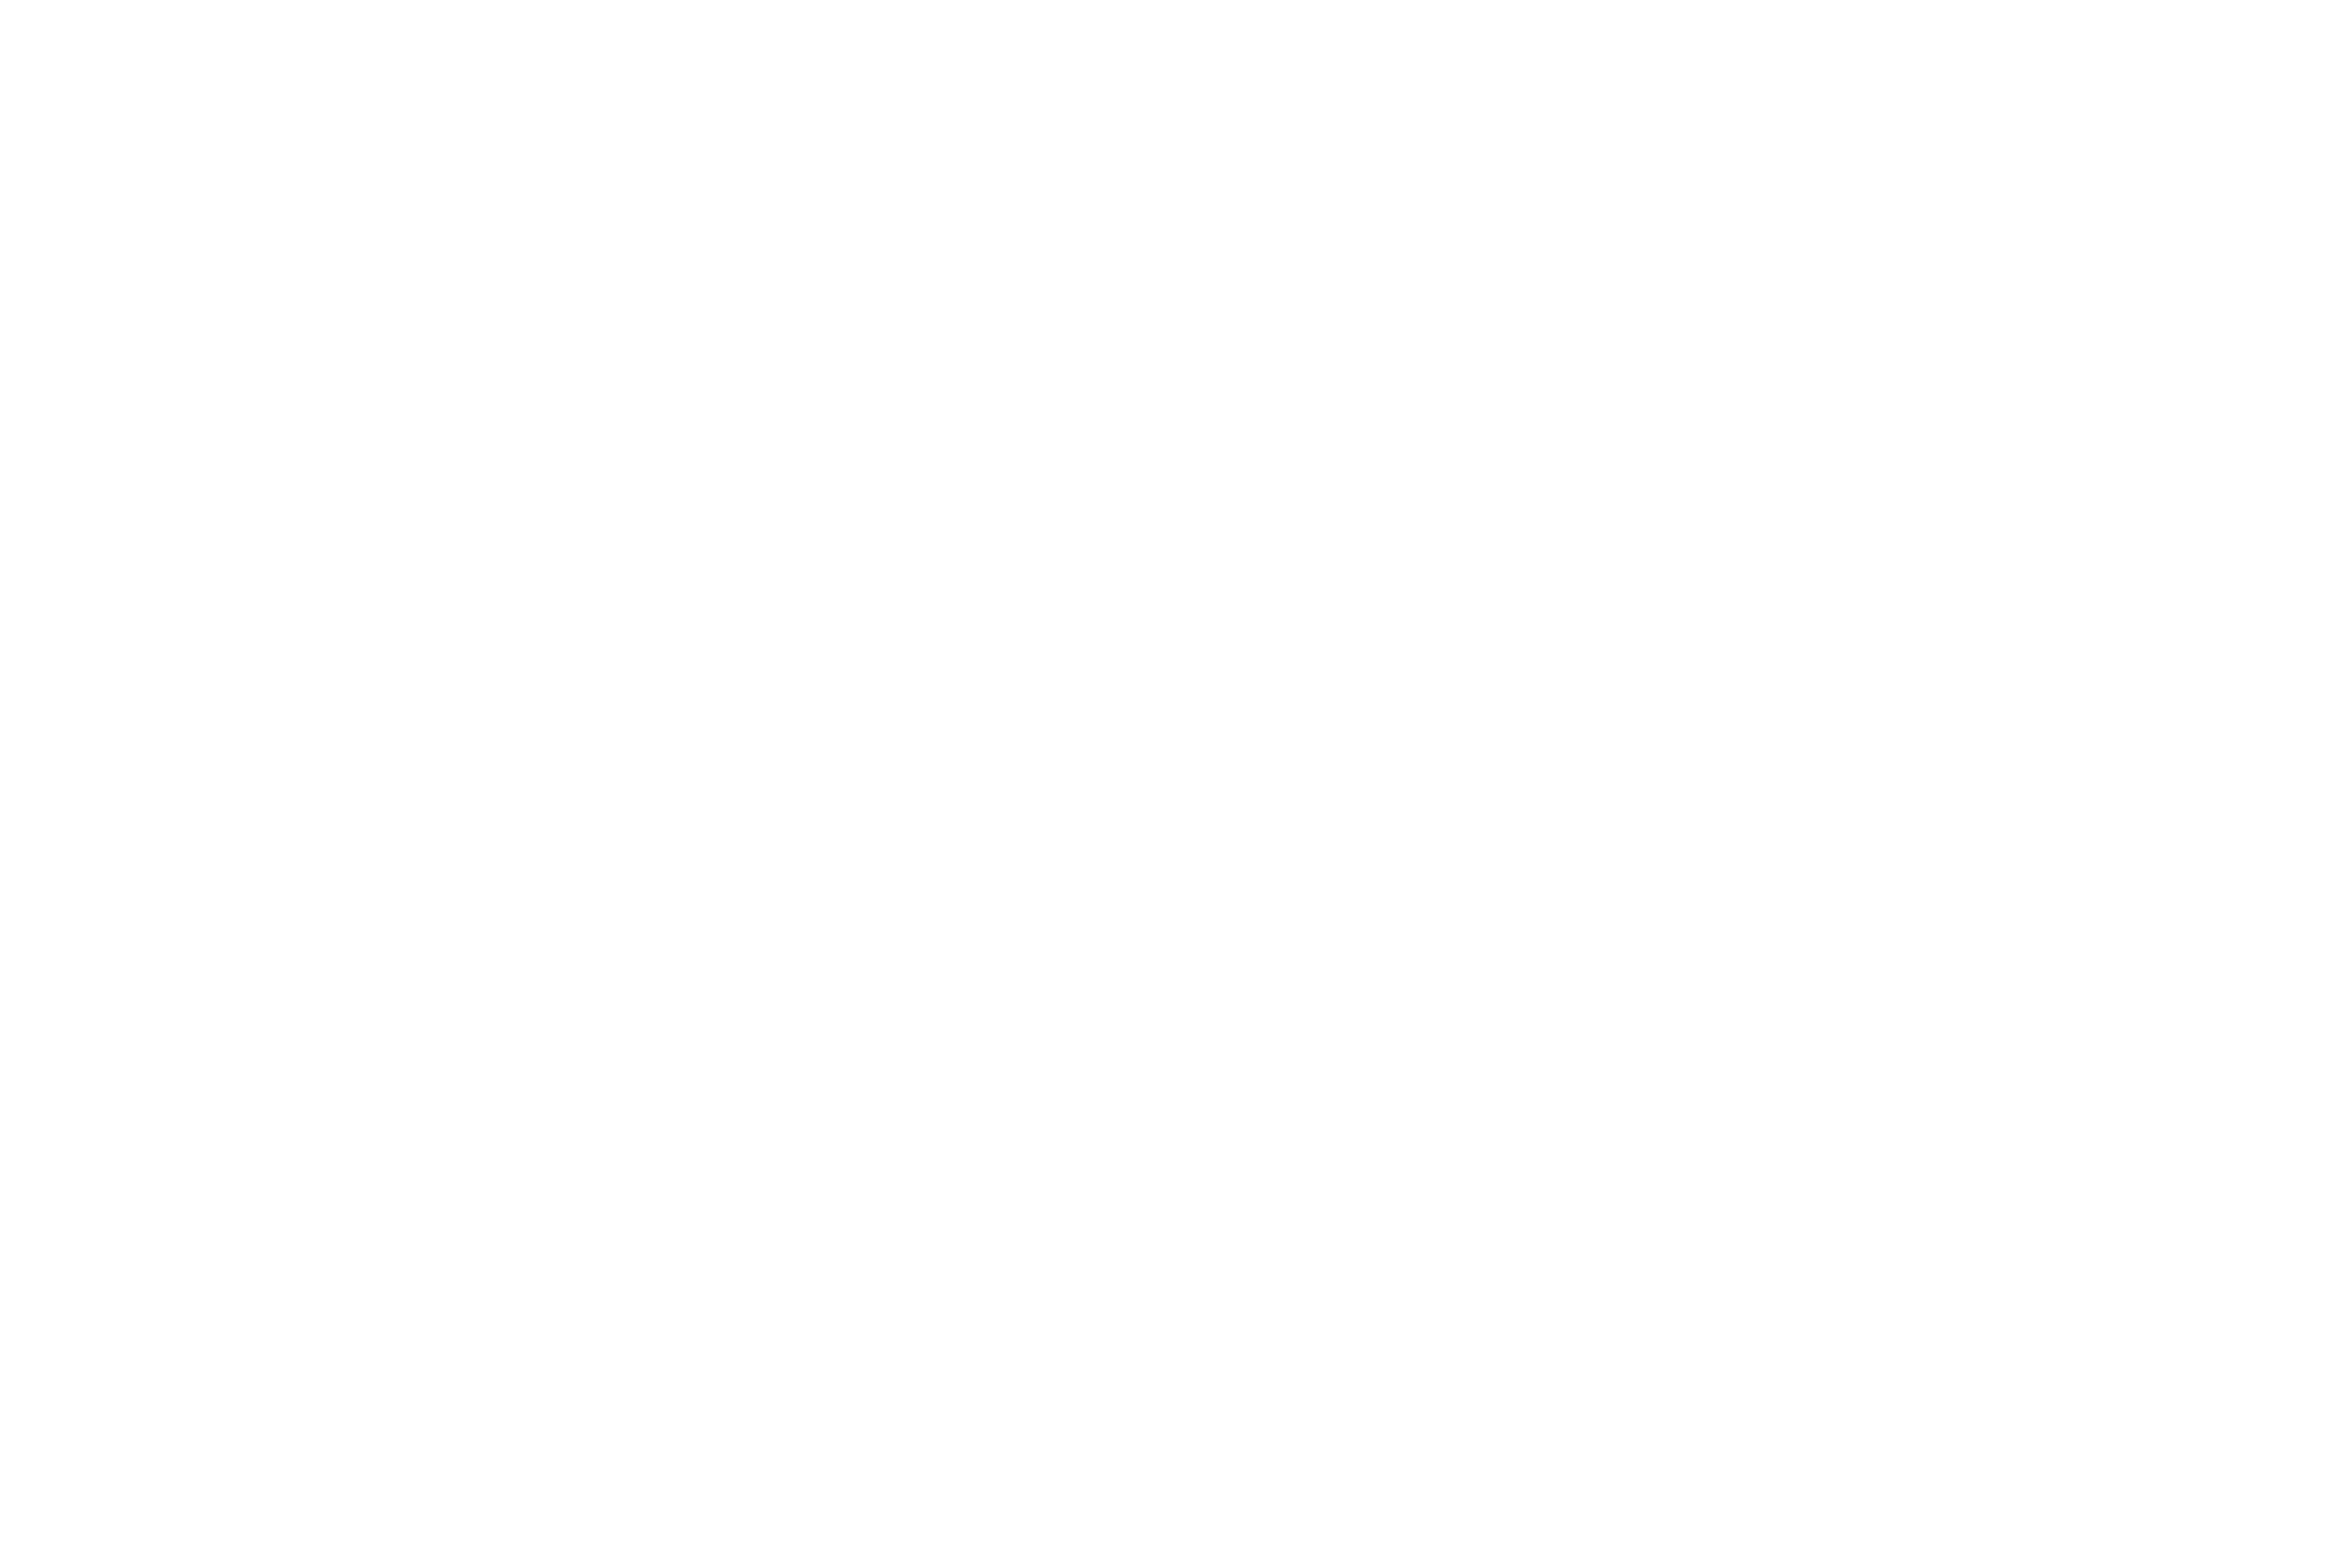 Deception symbols of Top 20